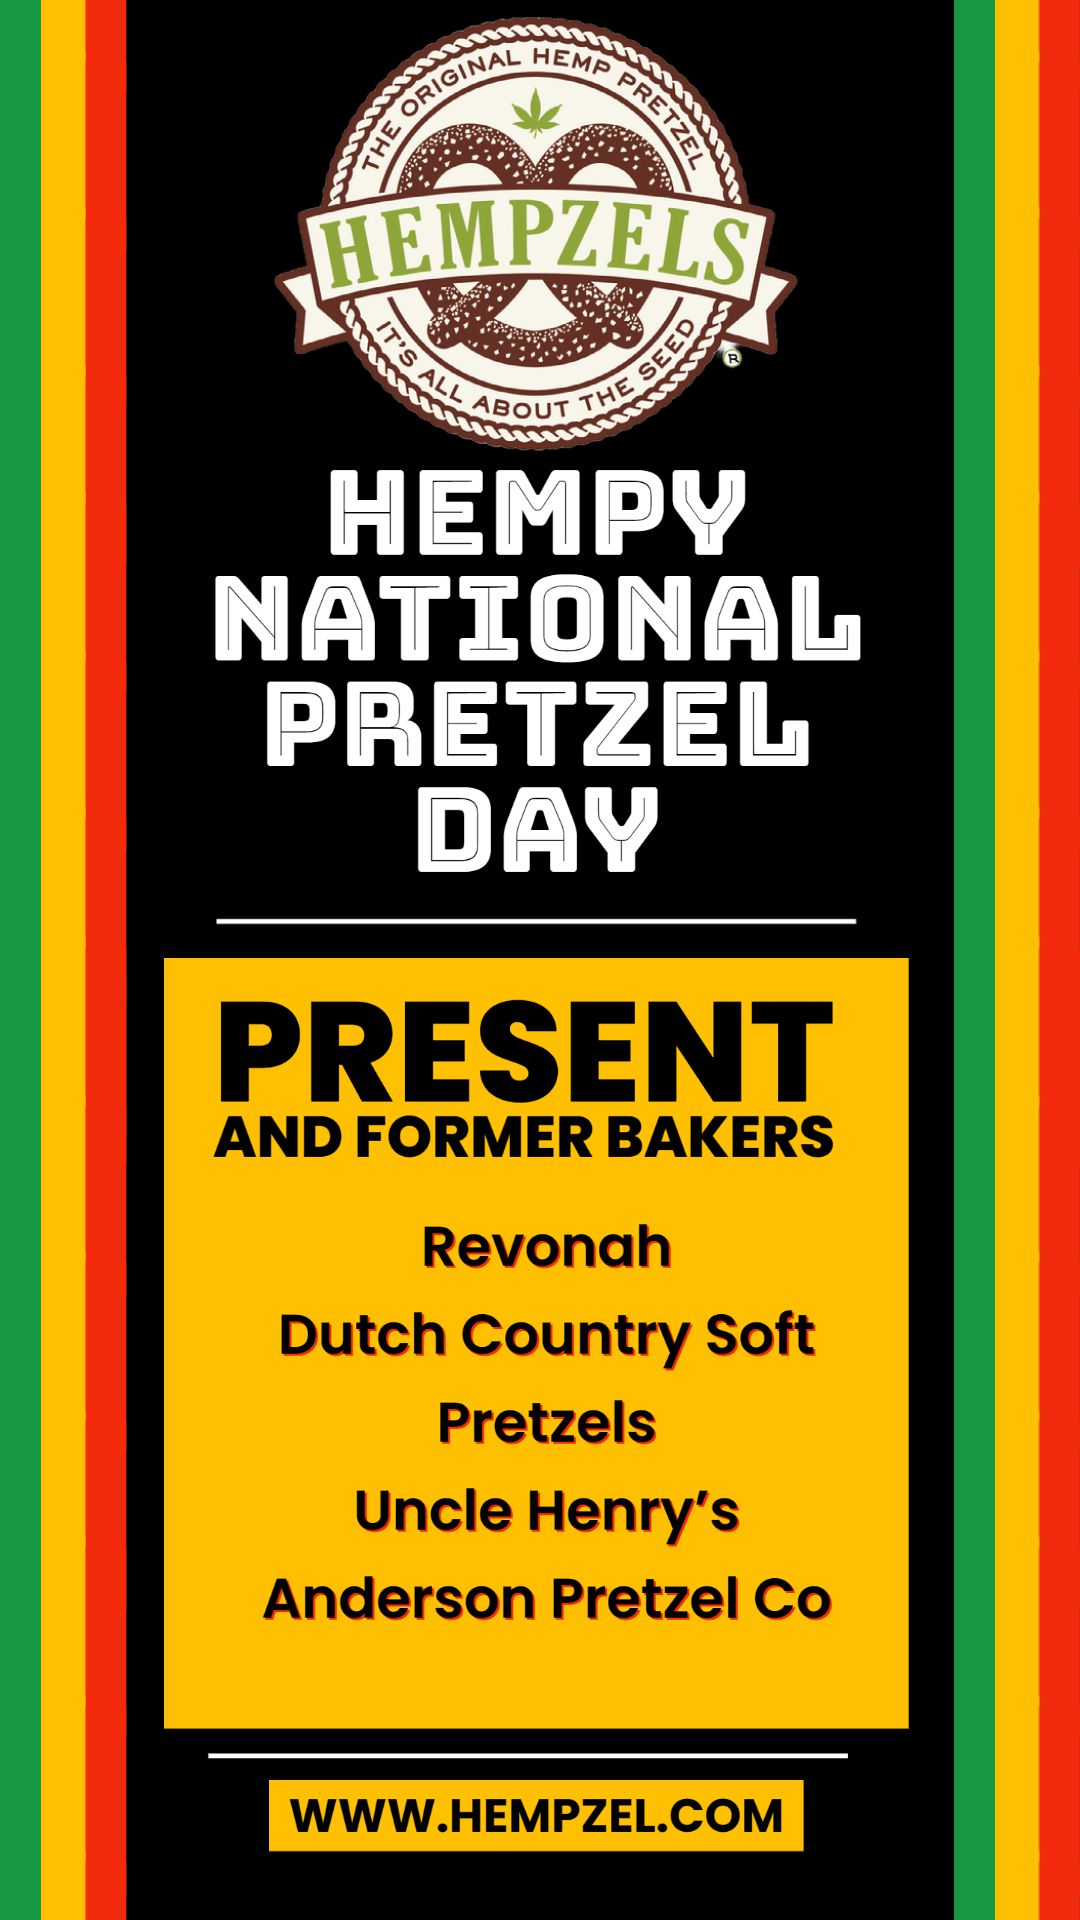 Red Yellow & Green Rasta colors striped with bold print celebrating National Pretzel Day & Hempzels.